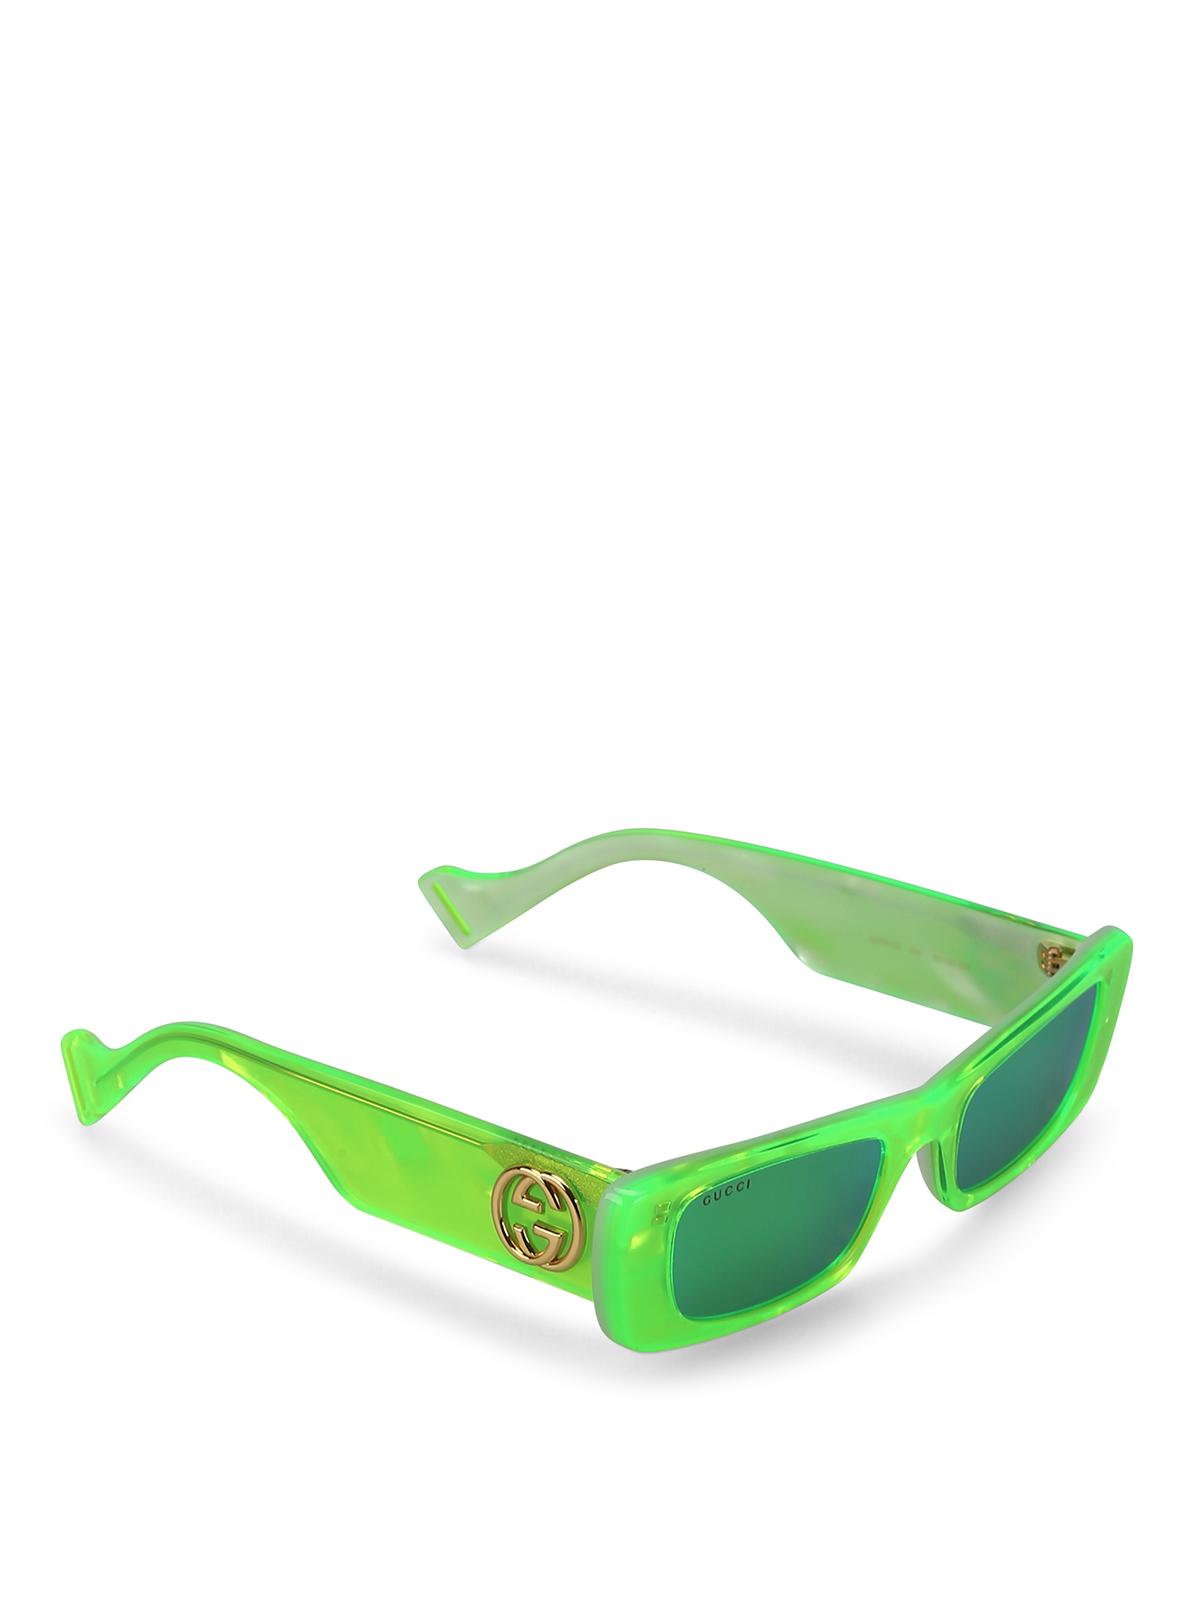 voorkomen nakoming Grazen Sunglasses Gucci - Pearly green sunglasses - GG0516S006 | iKRIX.com